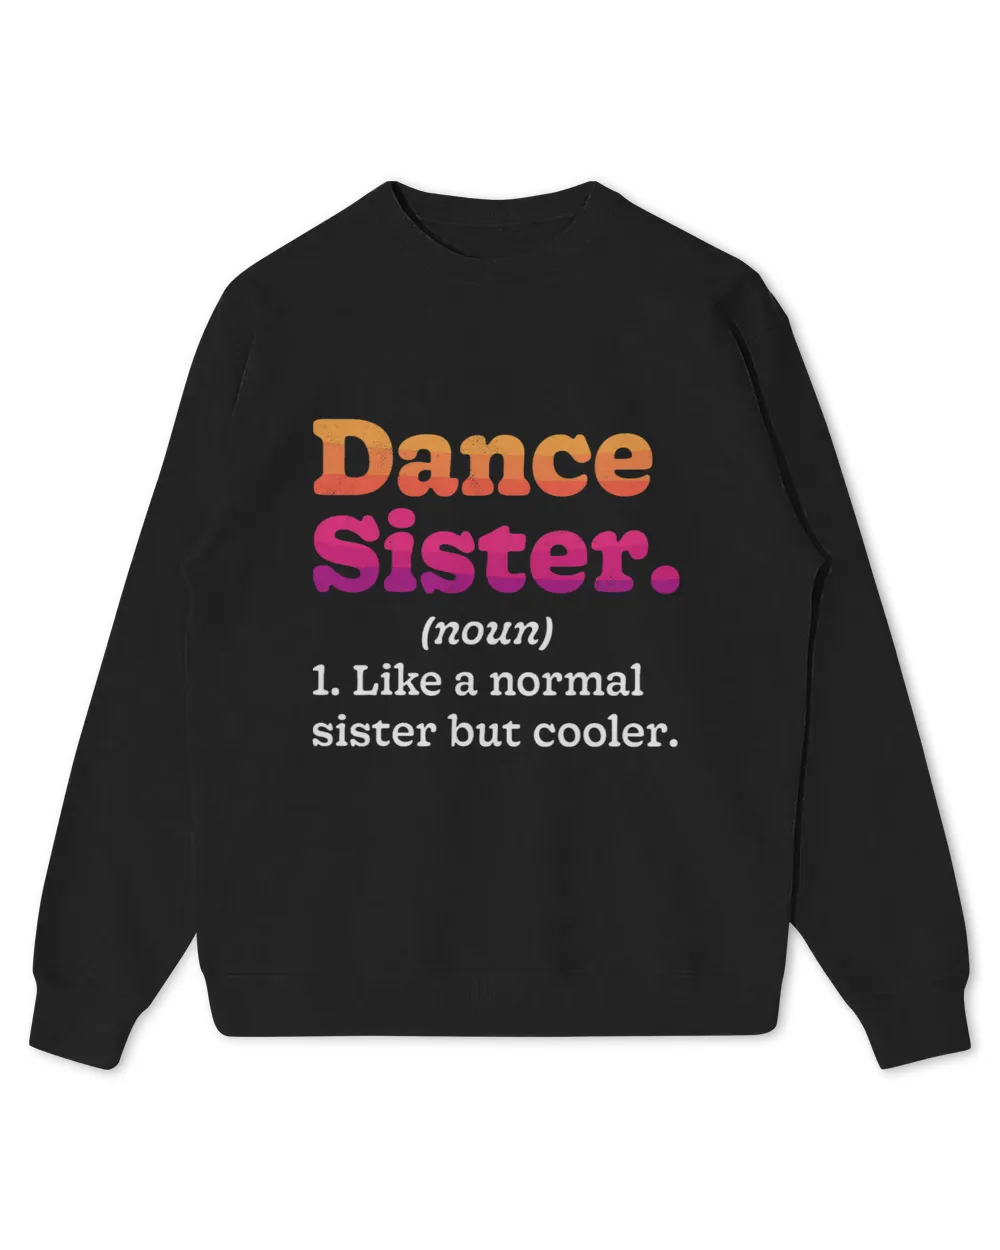 Dance Sister Noun Definition Dancing Girls Dancer Dictionary